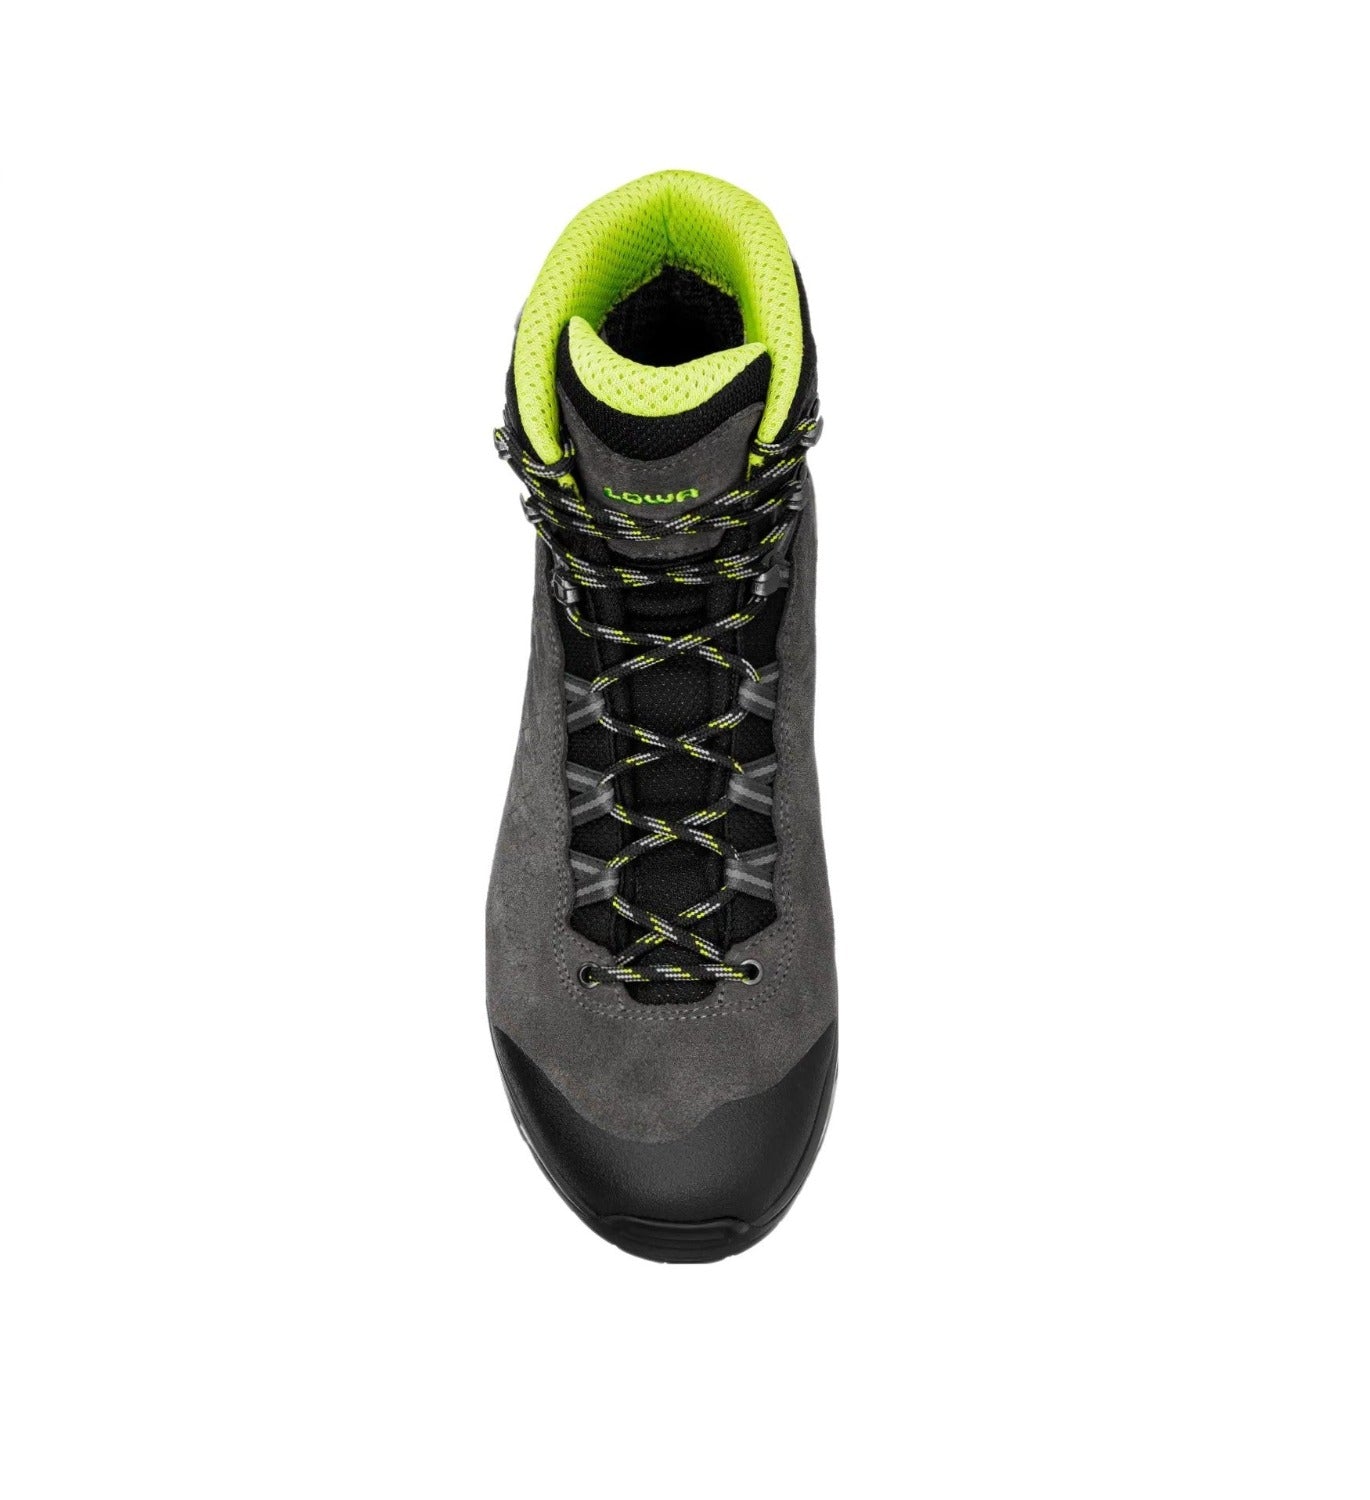 Chaussures de Rando Homme Lowa Explorer II GTX Mid : membrane Gore-Tex